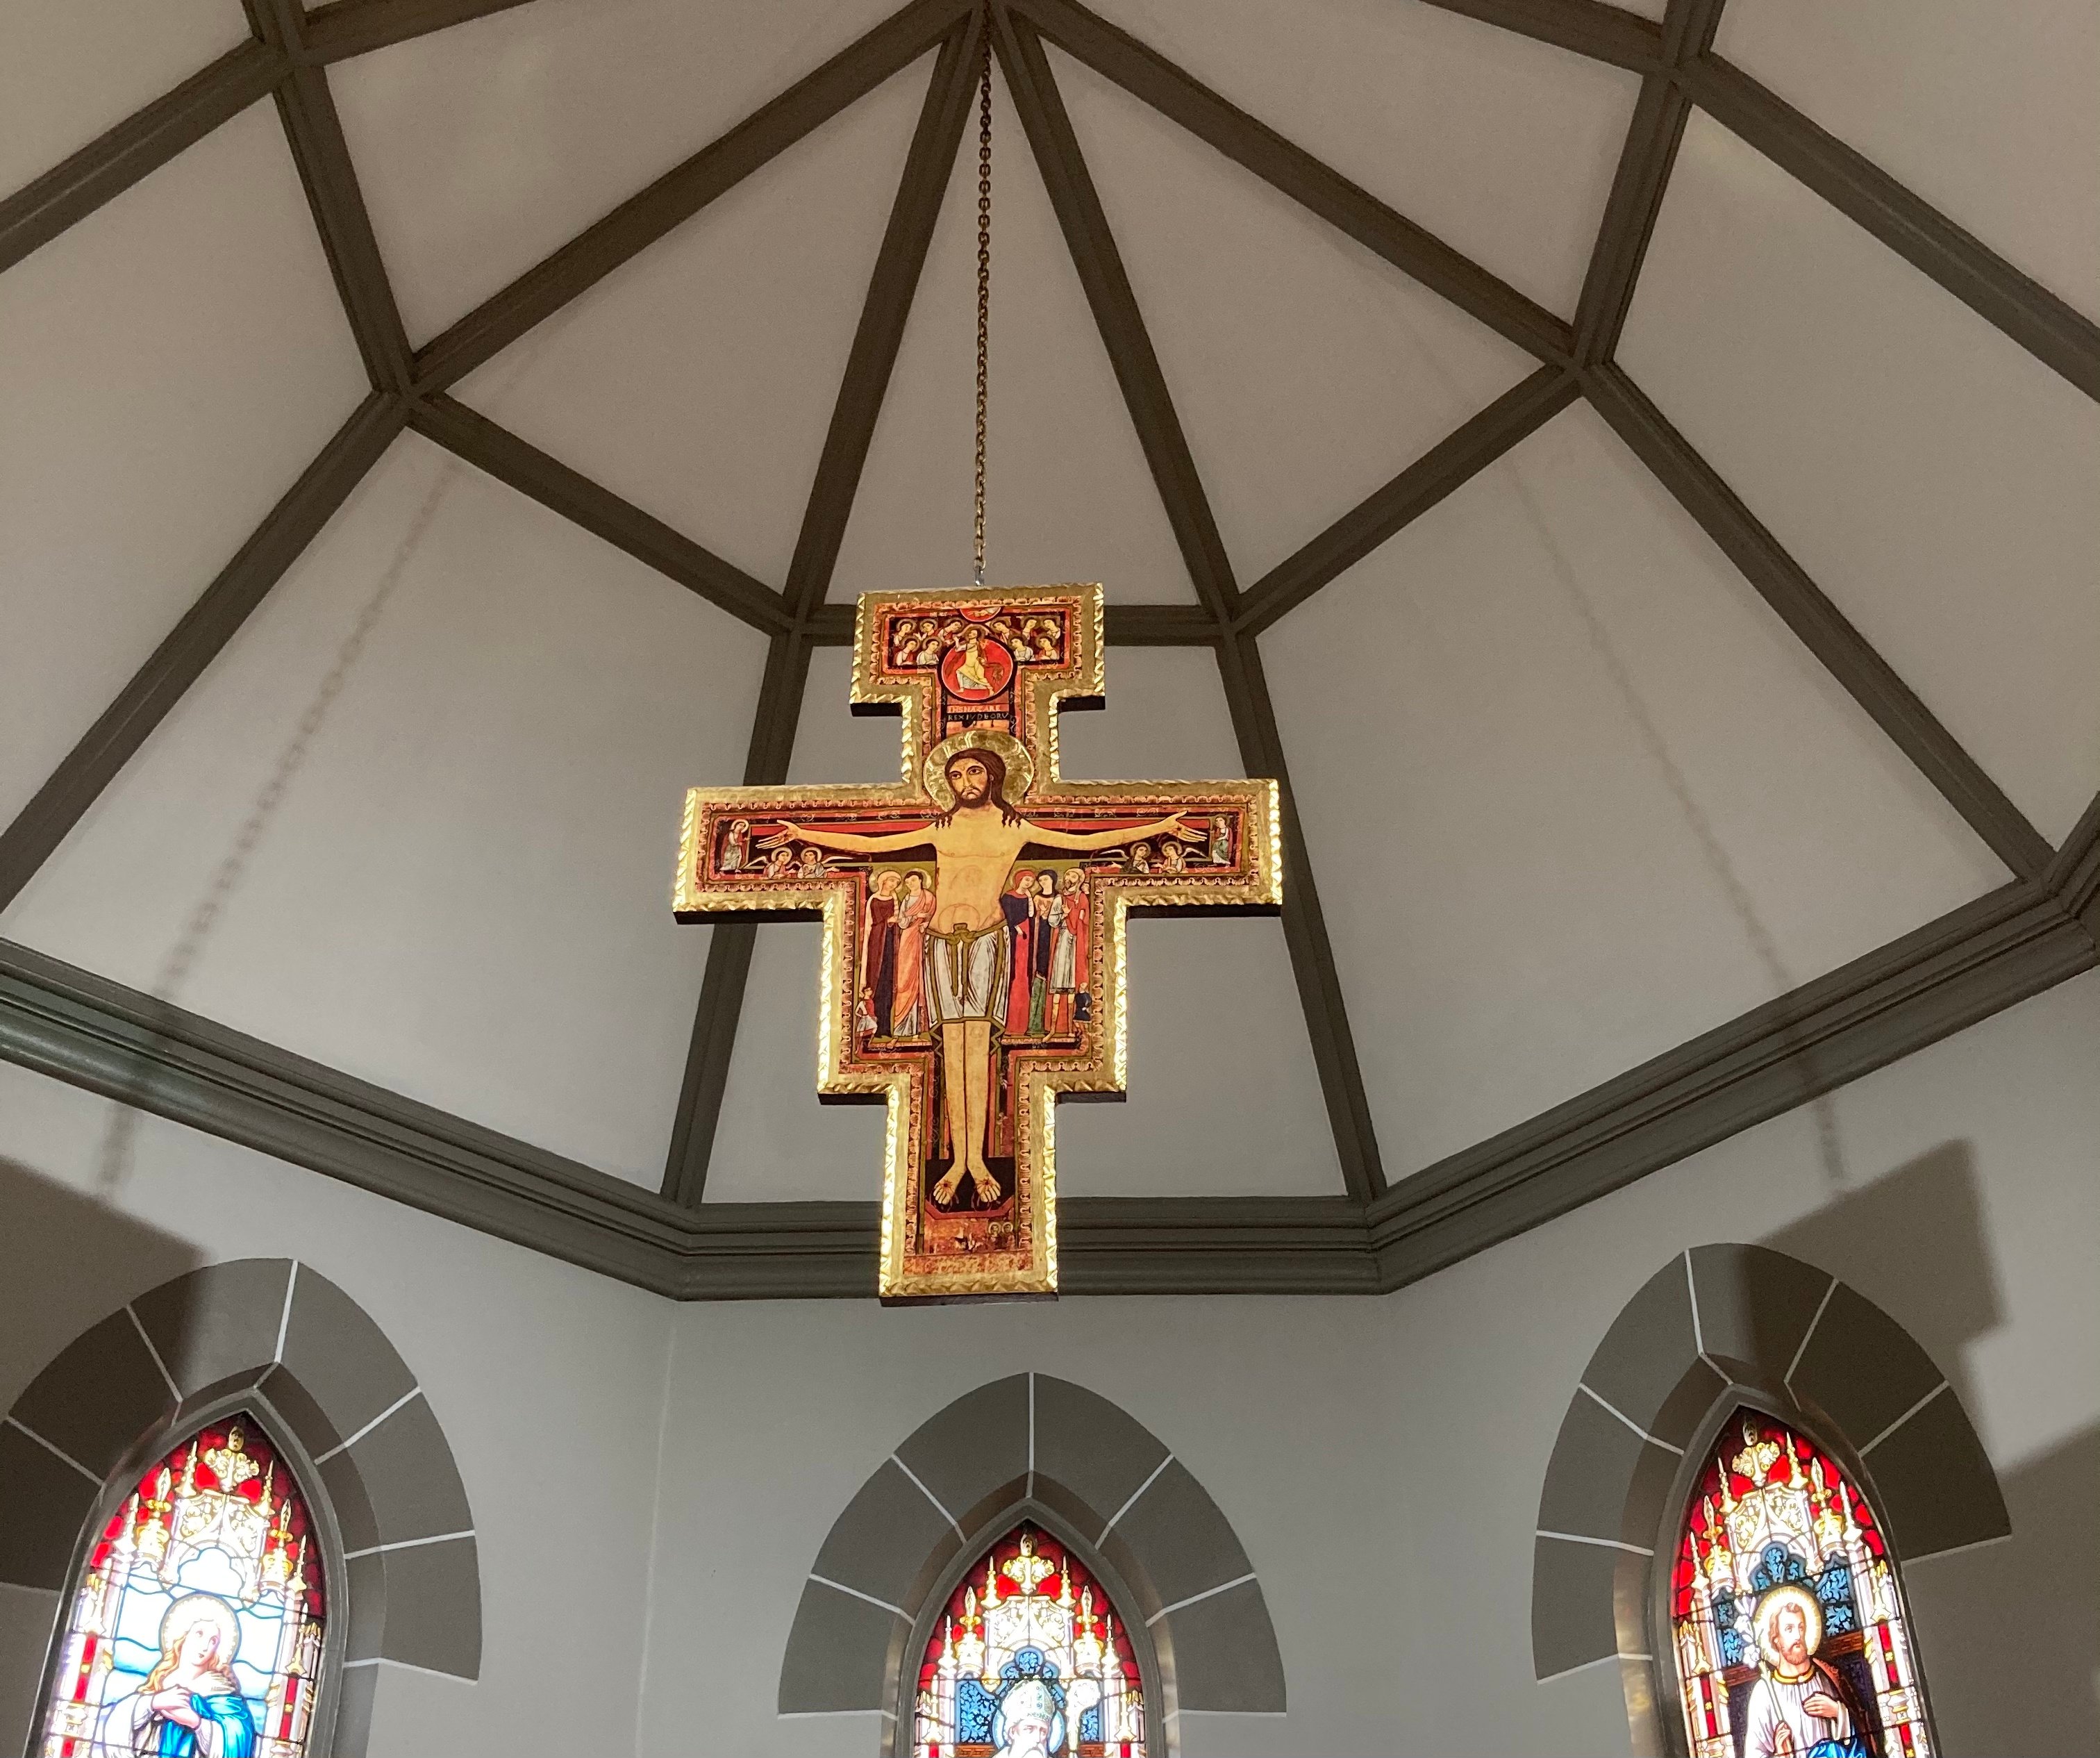 Hanging crucifix over sanctuary